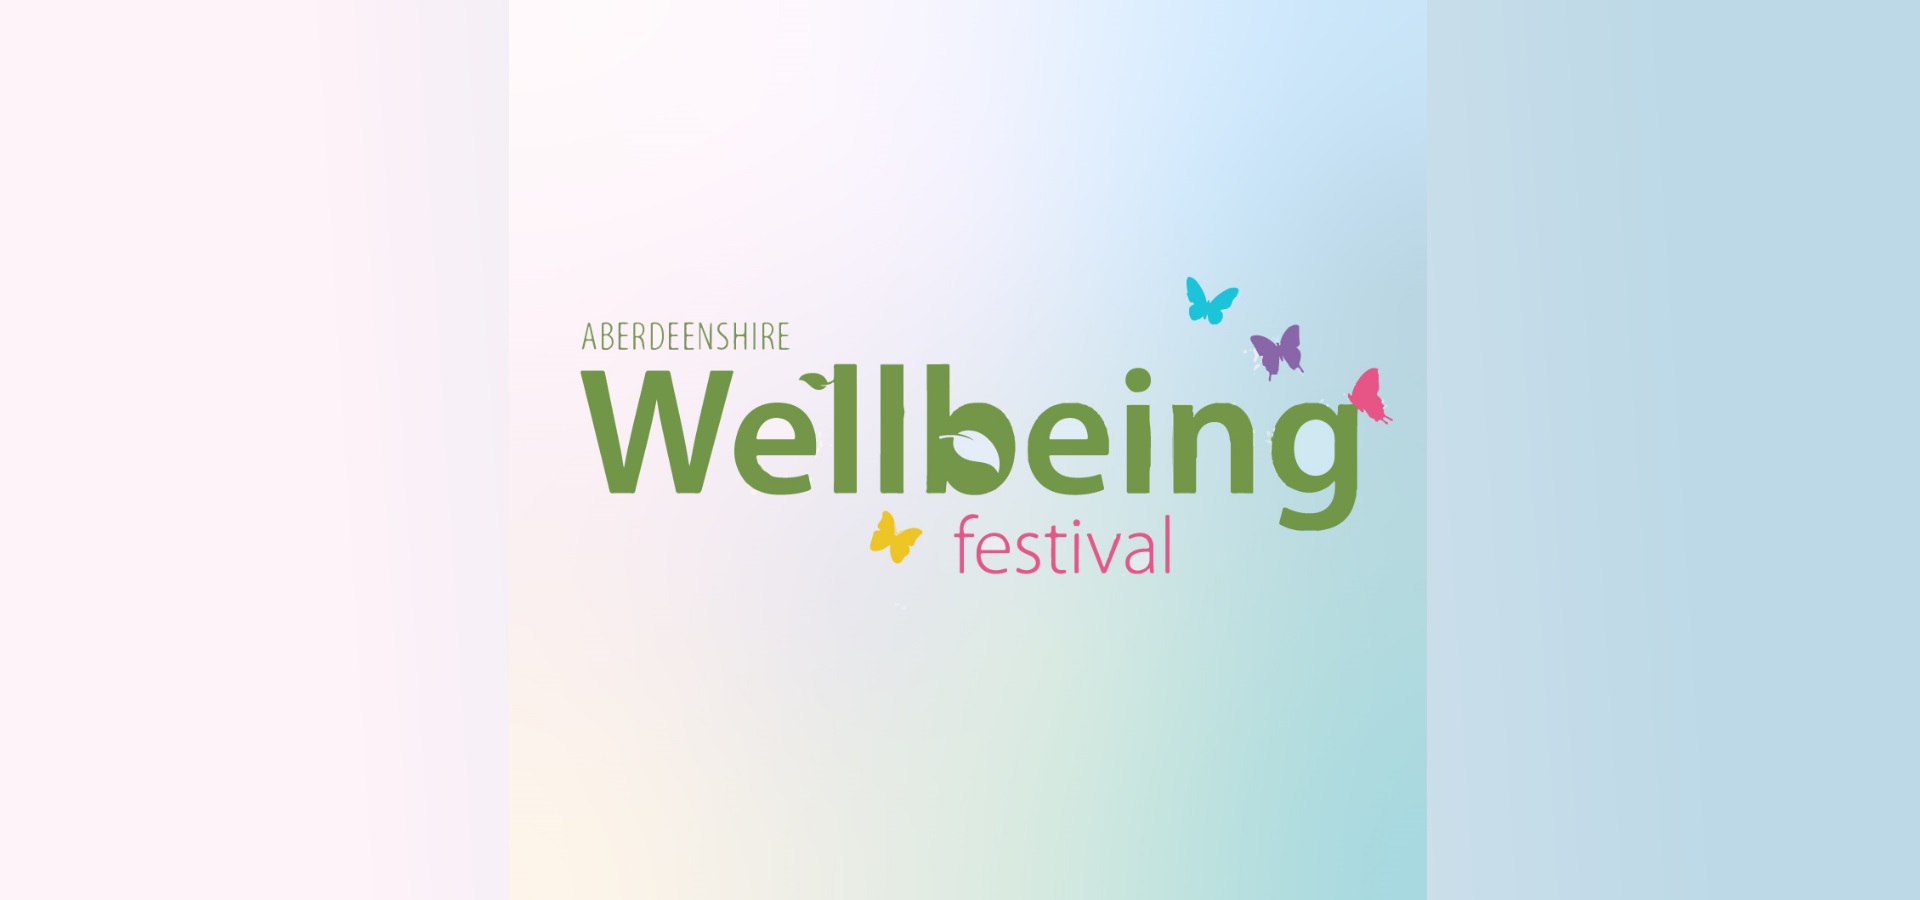 Aberdeenshire Wellbeing Festival Banner